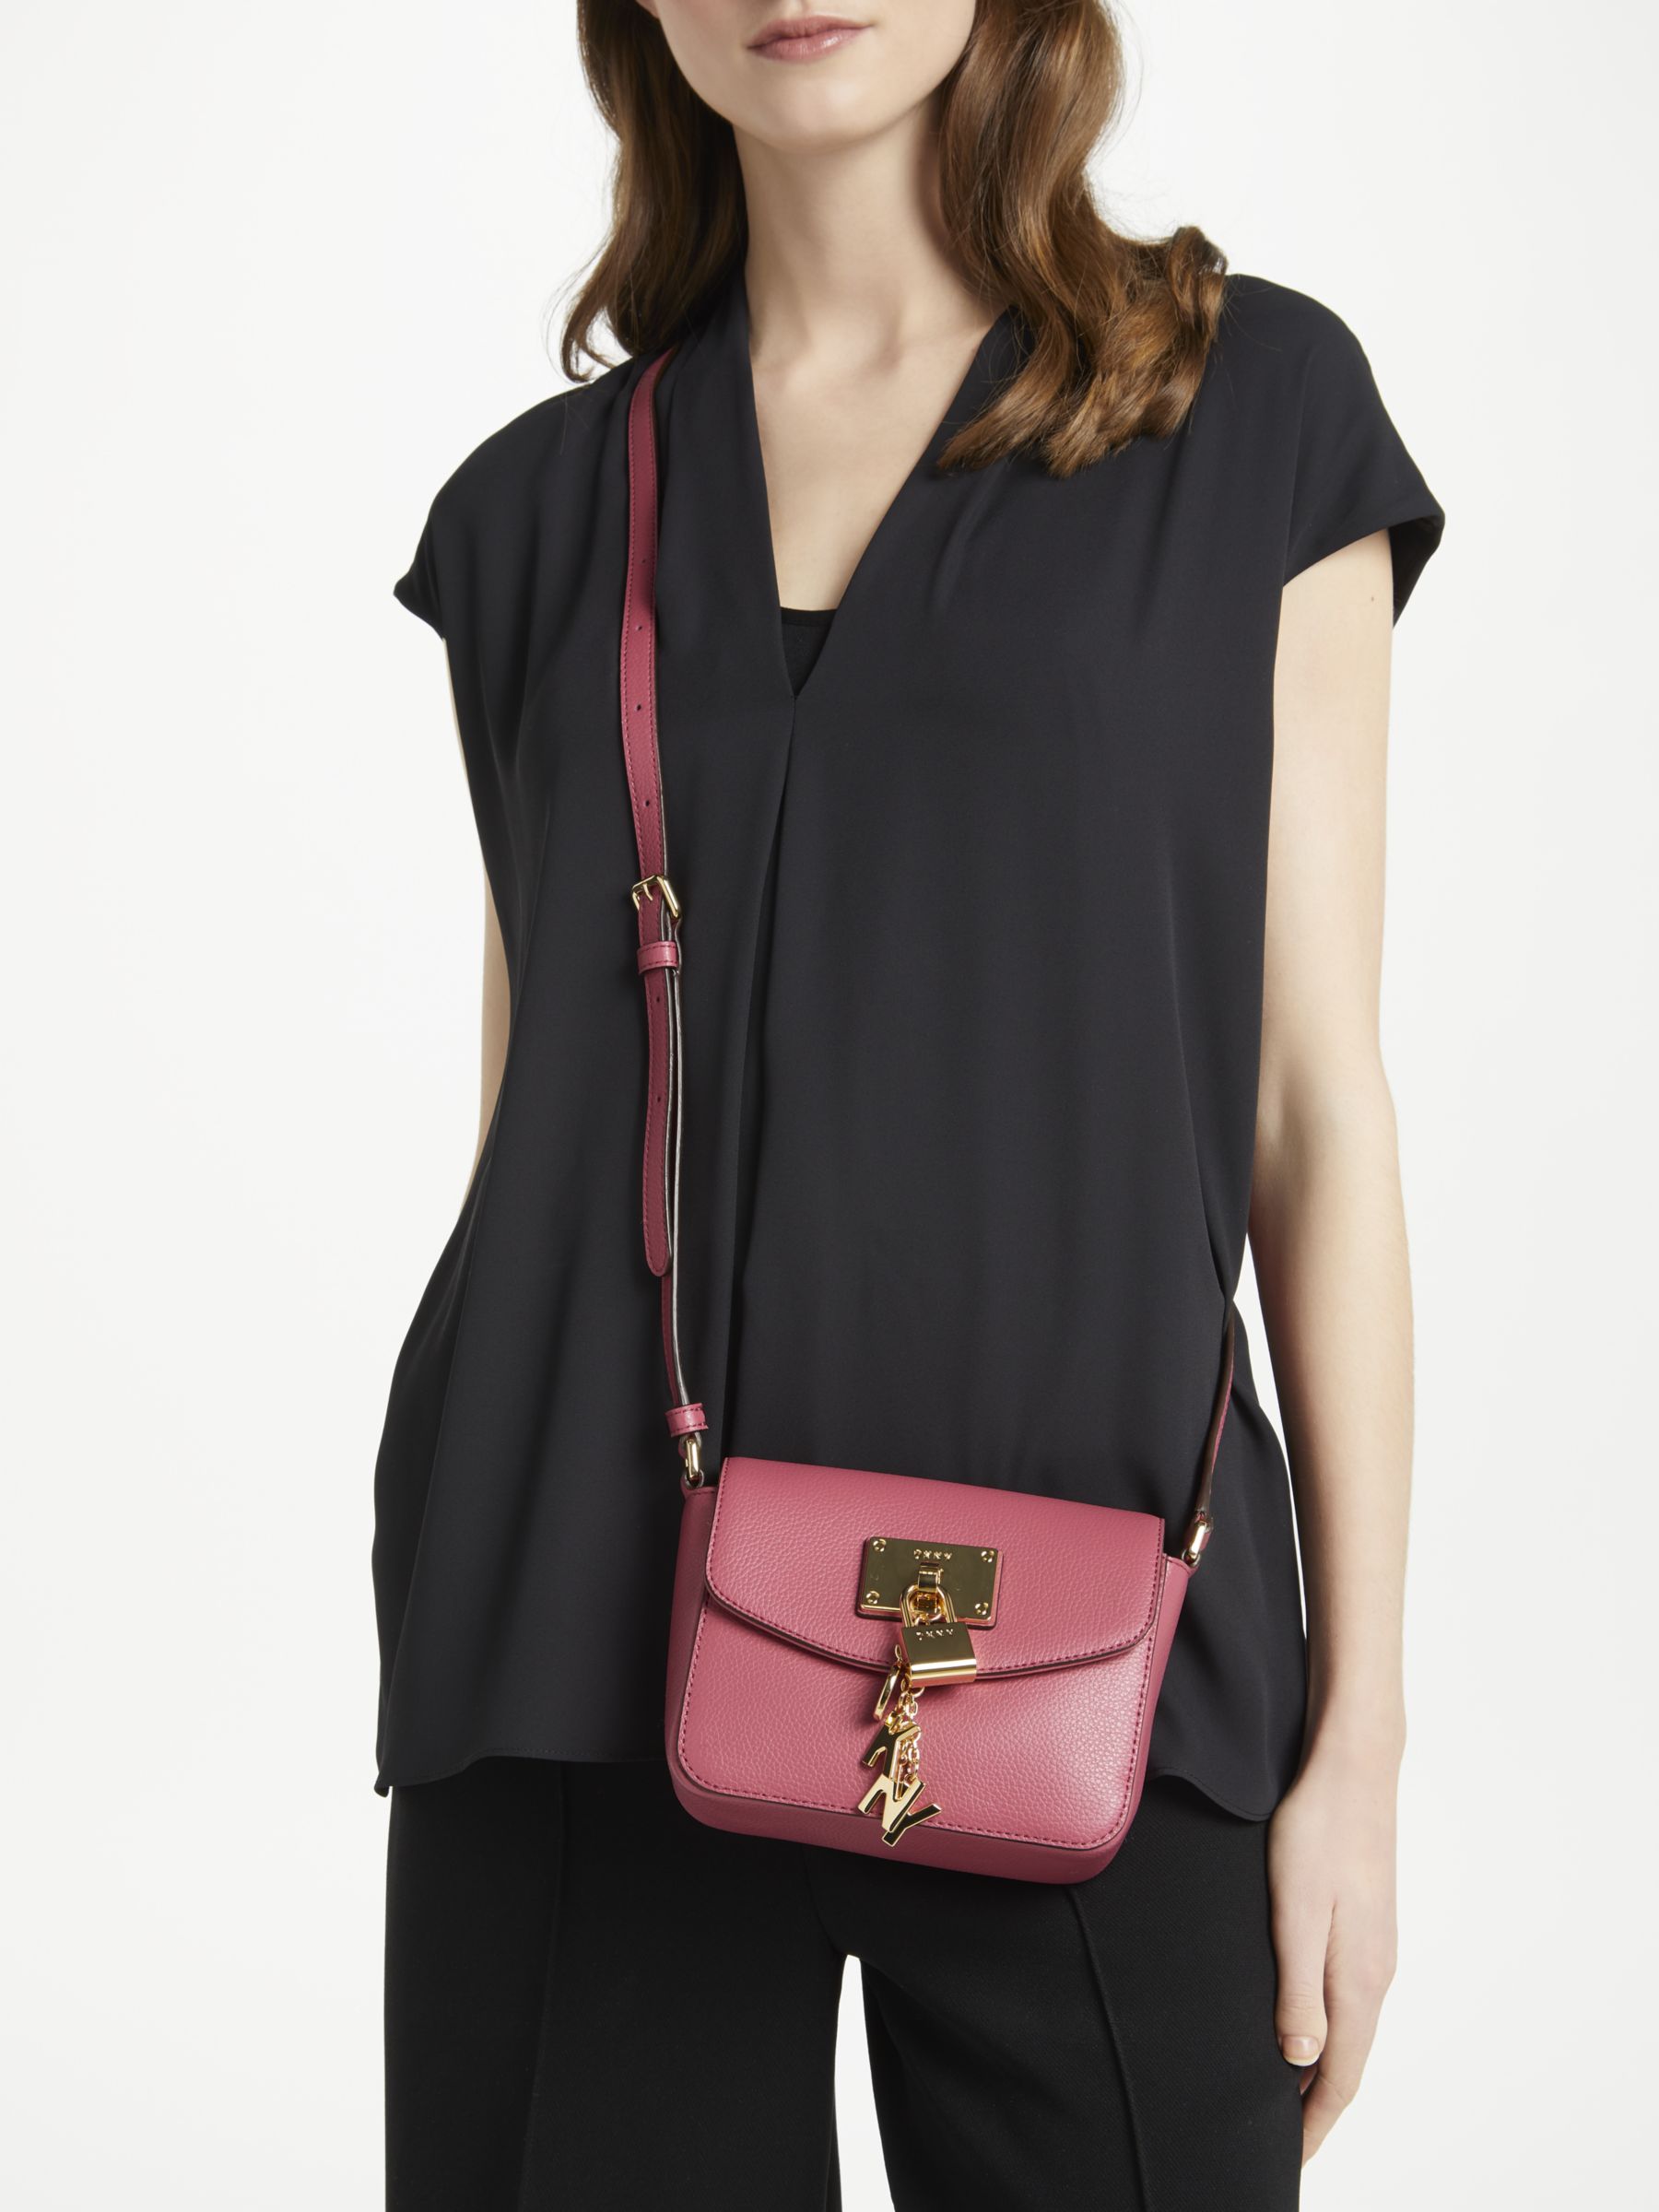 Hot Pink DKNY Hobo Bag with Scarf and Sunglasses - Handbag with